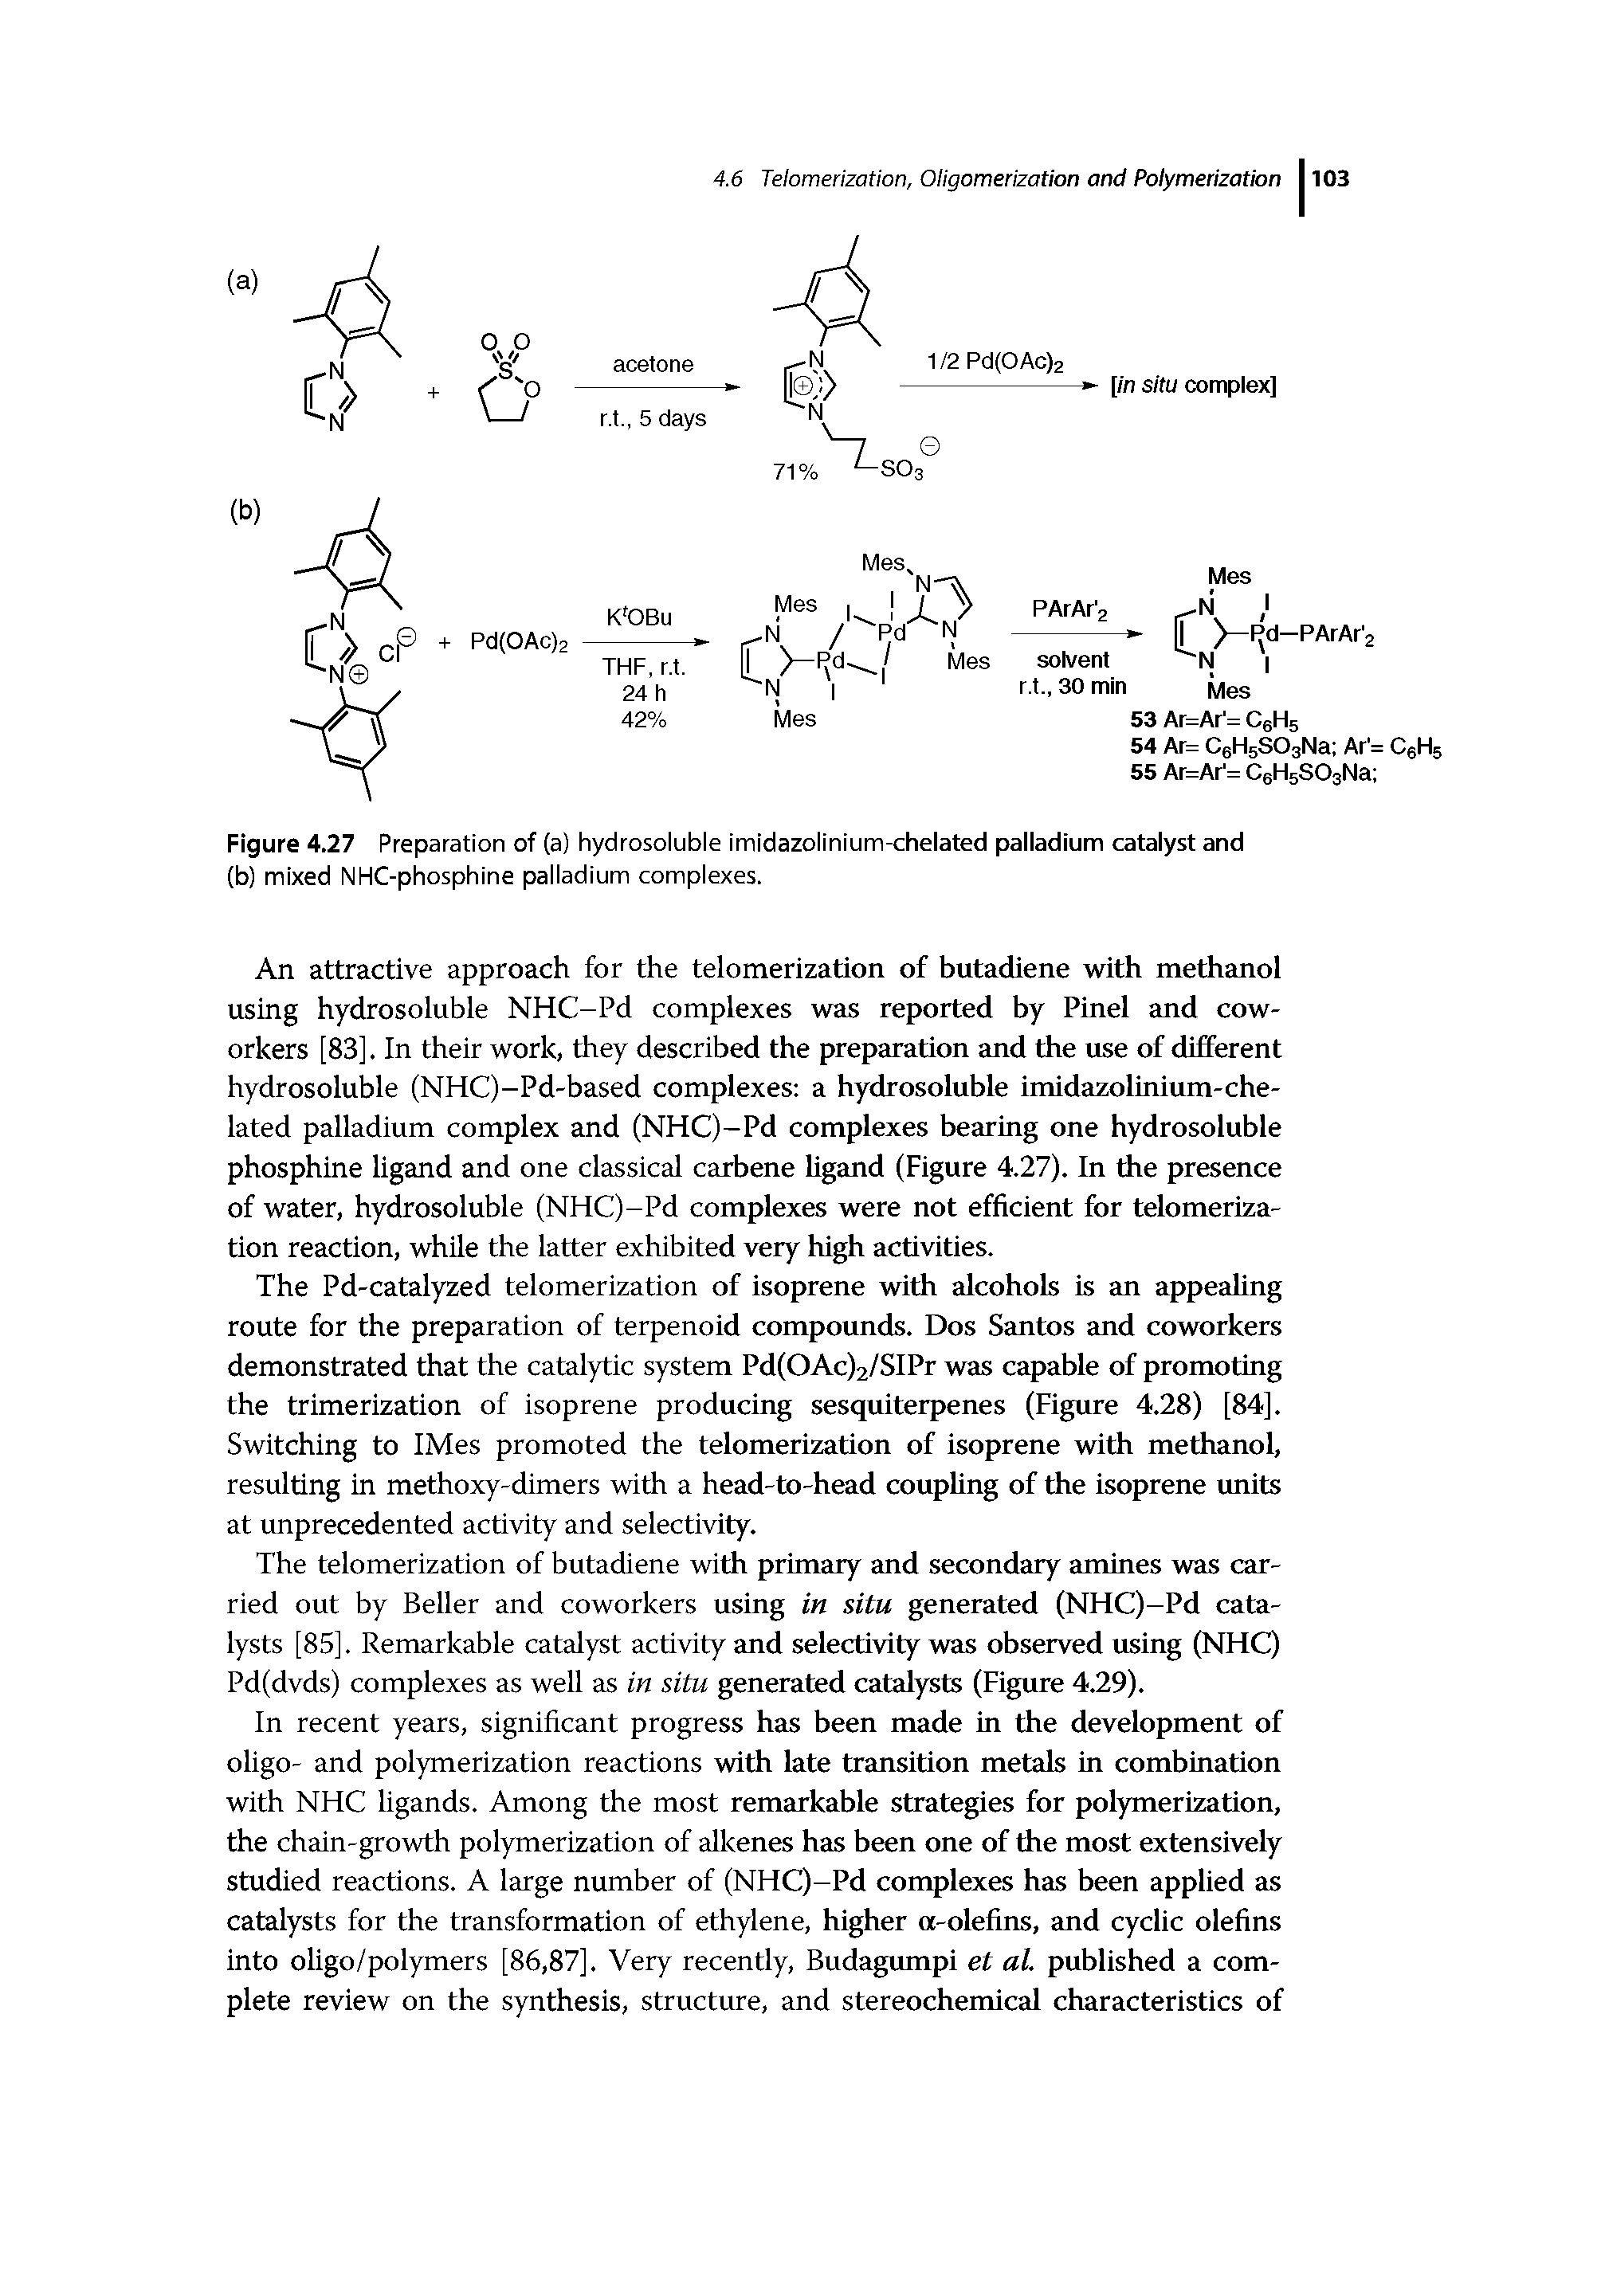 Figure 4.27 Preparation of (a) hydrosoluble Imidazollnlum-chelated palladium catalyst and (b) mixed NHC-phosphine palladium complexes.